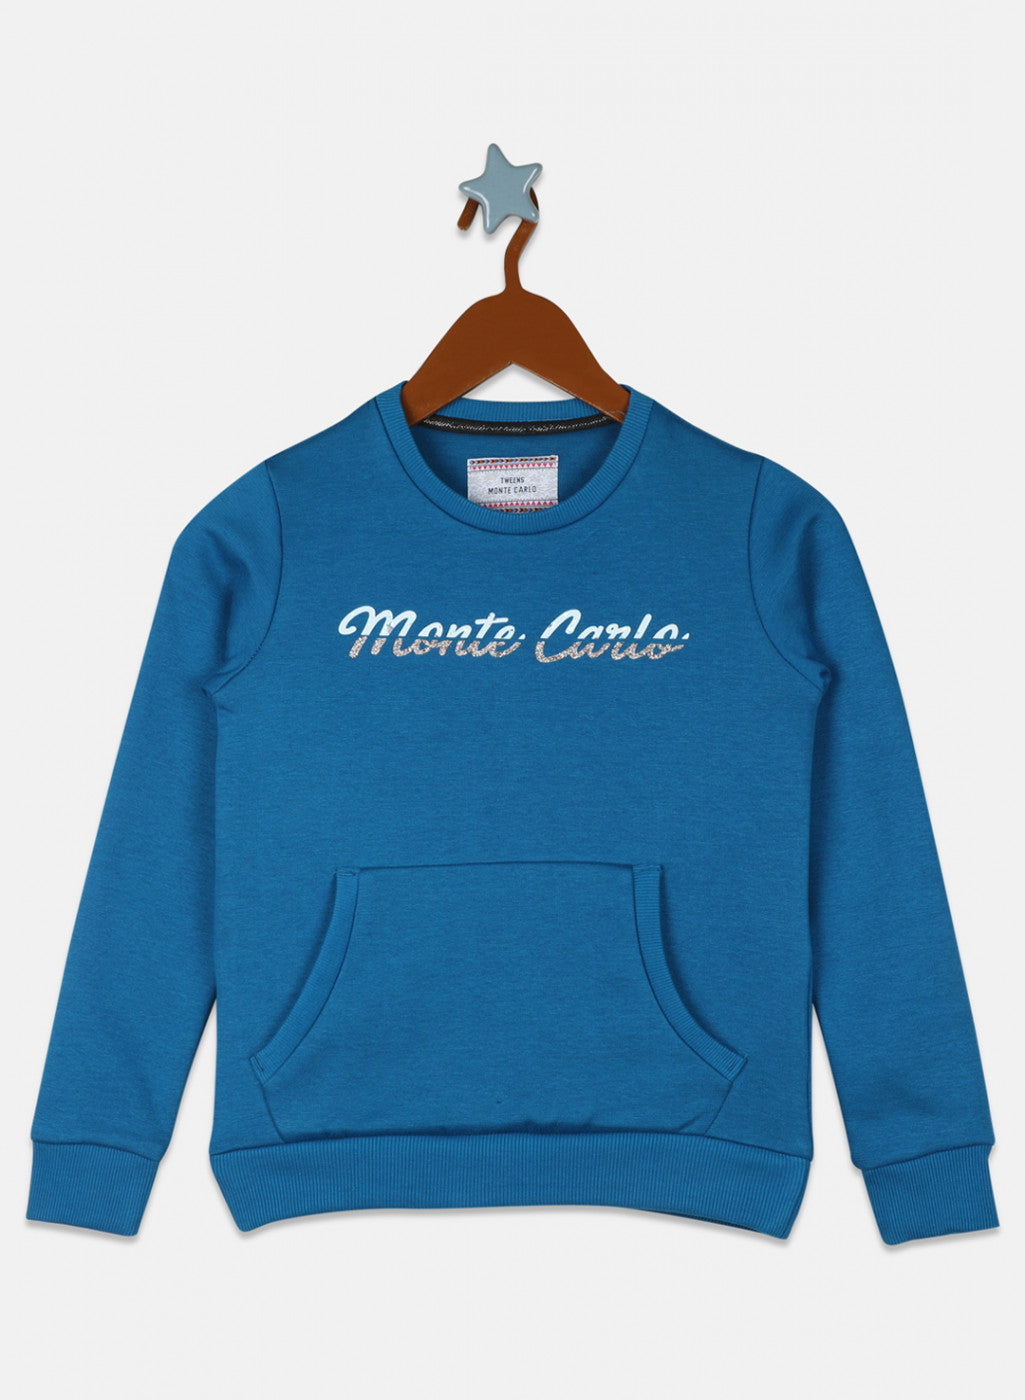 Girls Blue Printed Sweatshirt